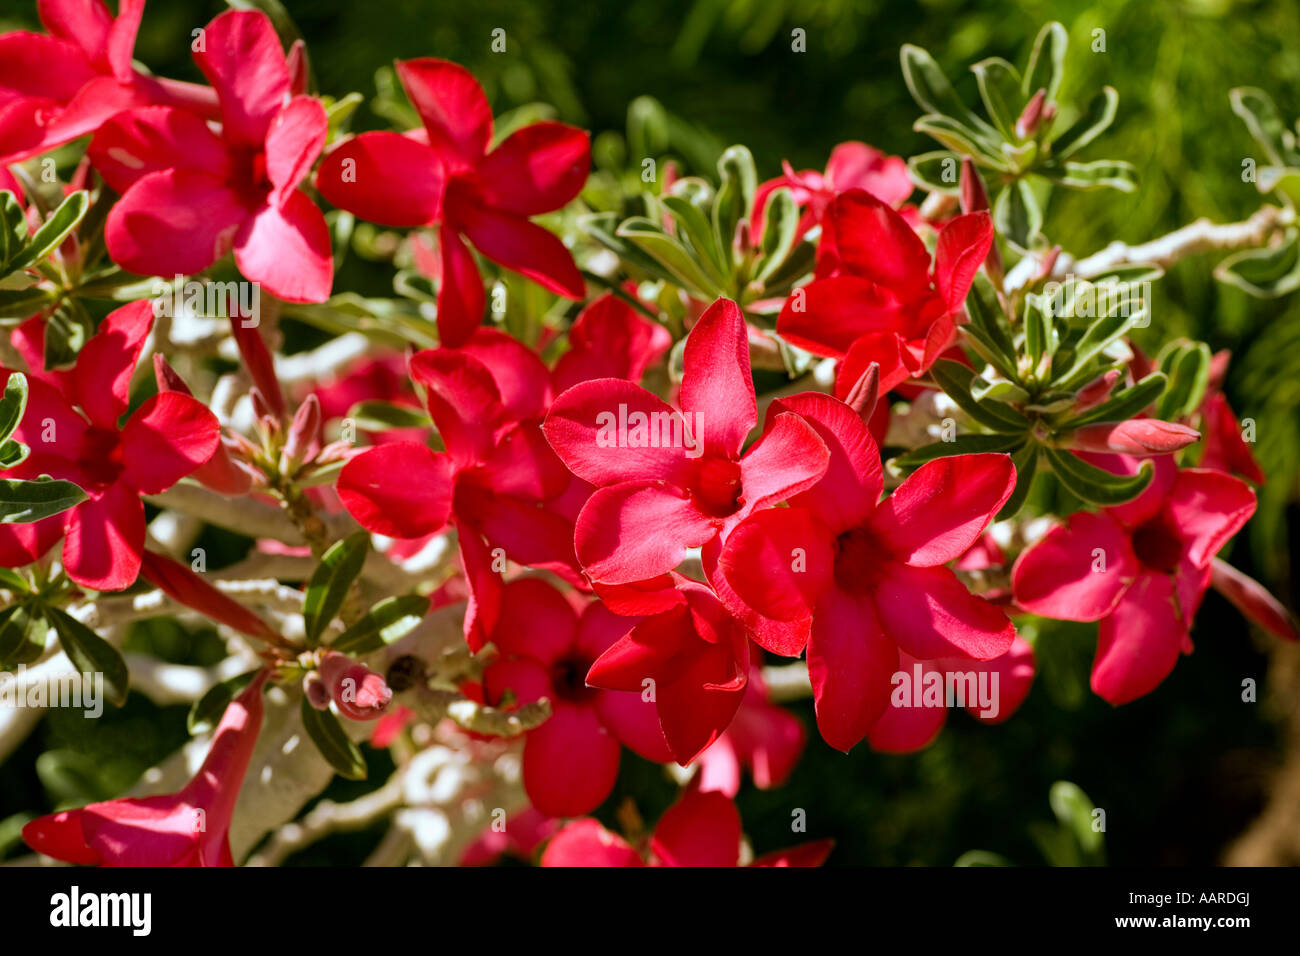 Crimson Star Adenium Apocynaceae Dogbane Family Stock Photo